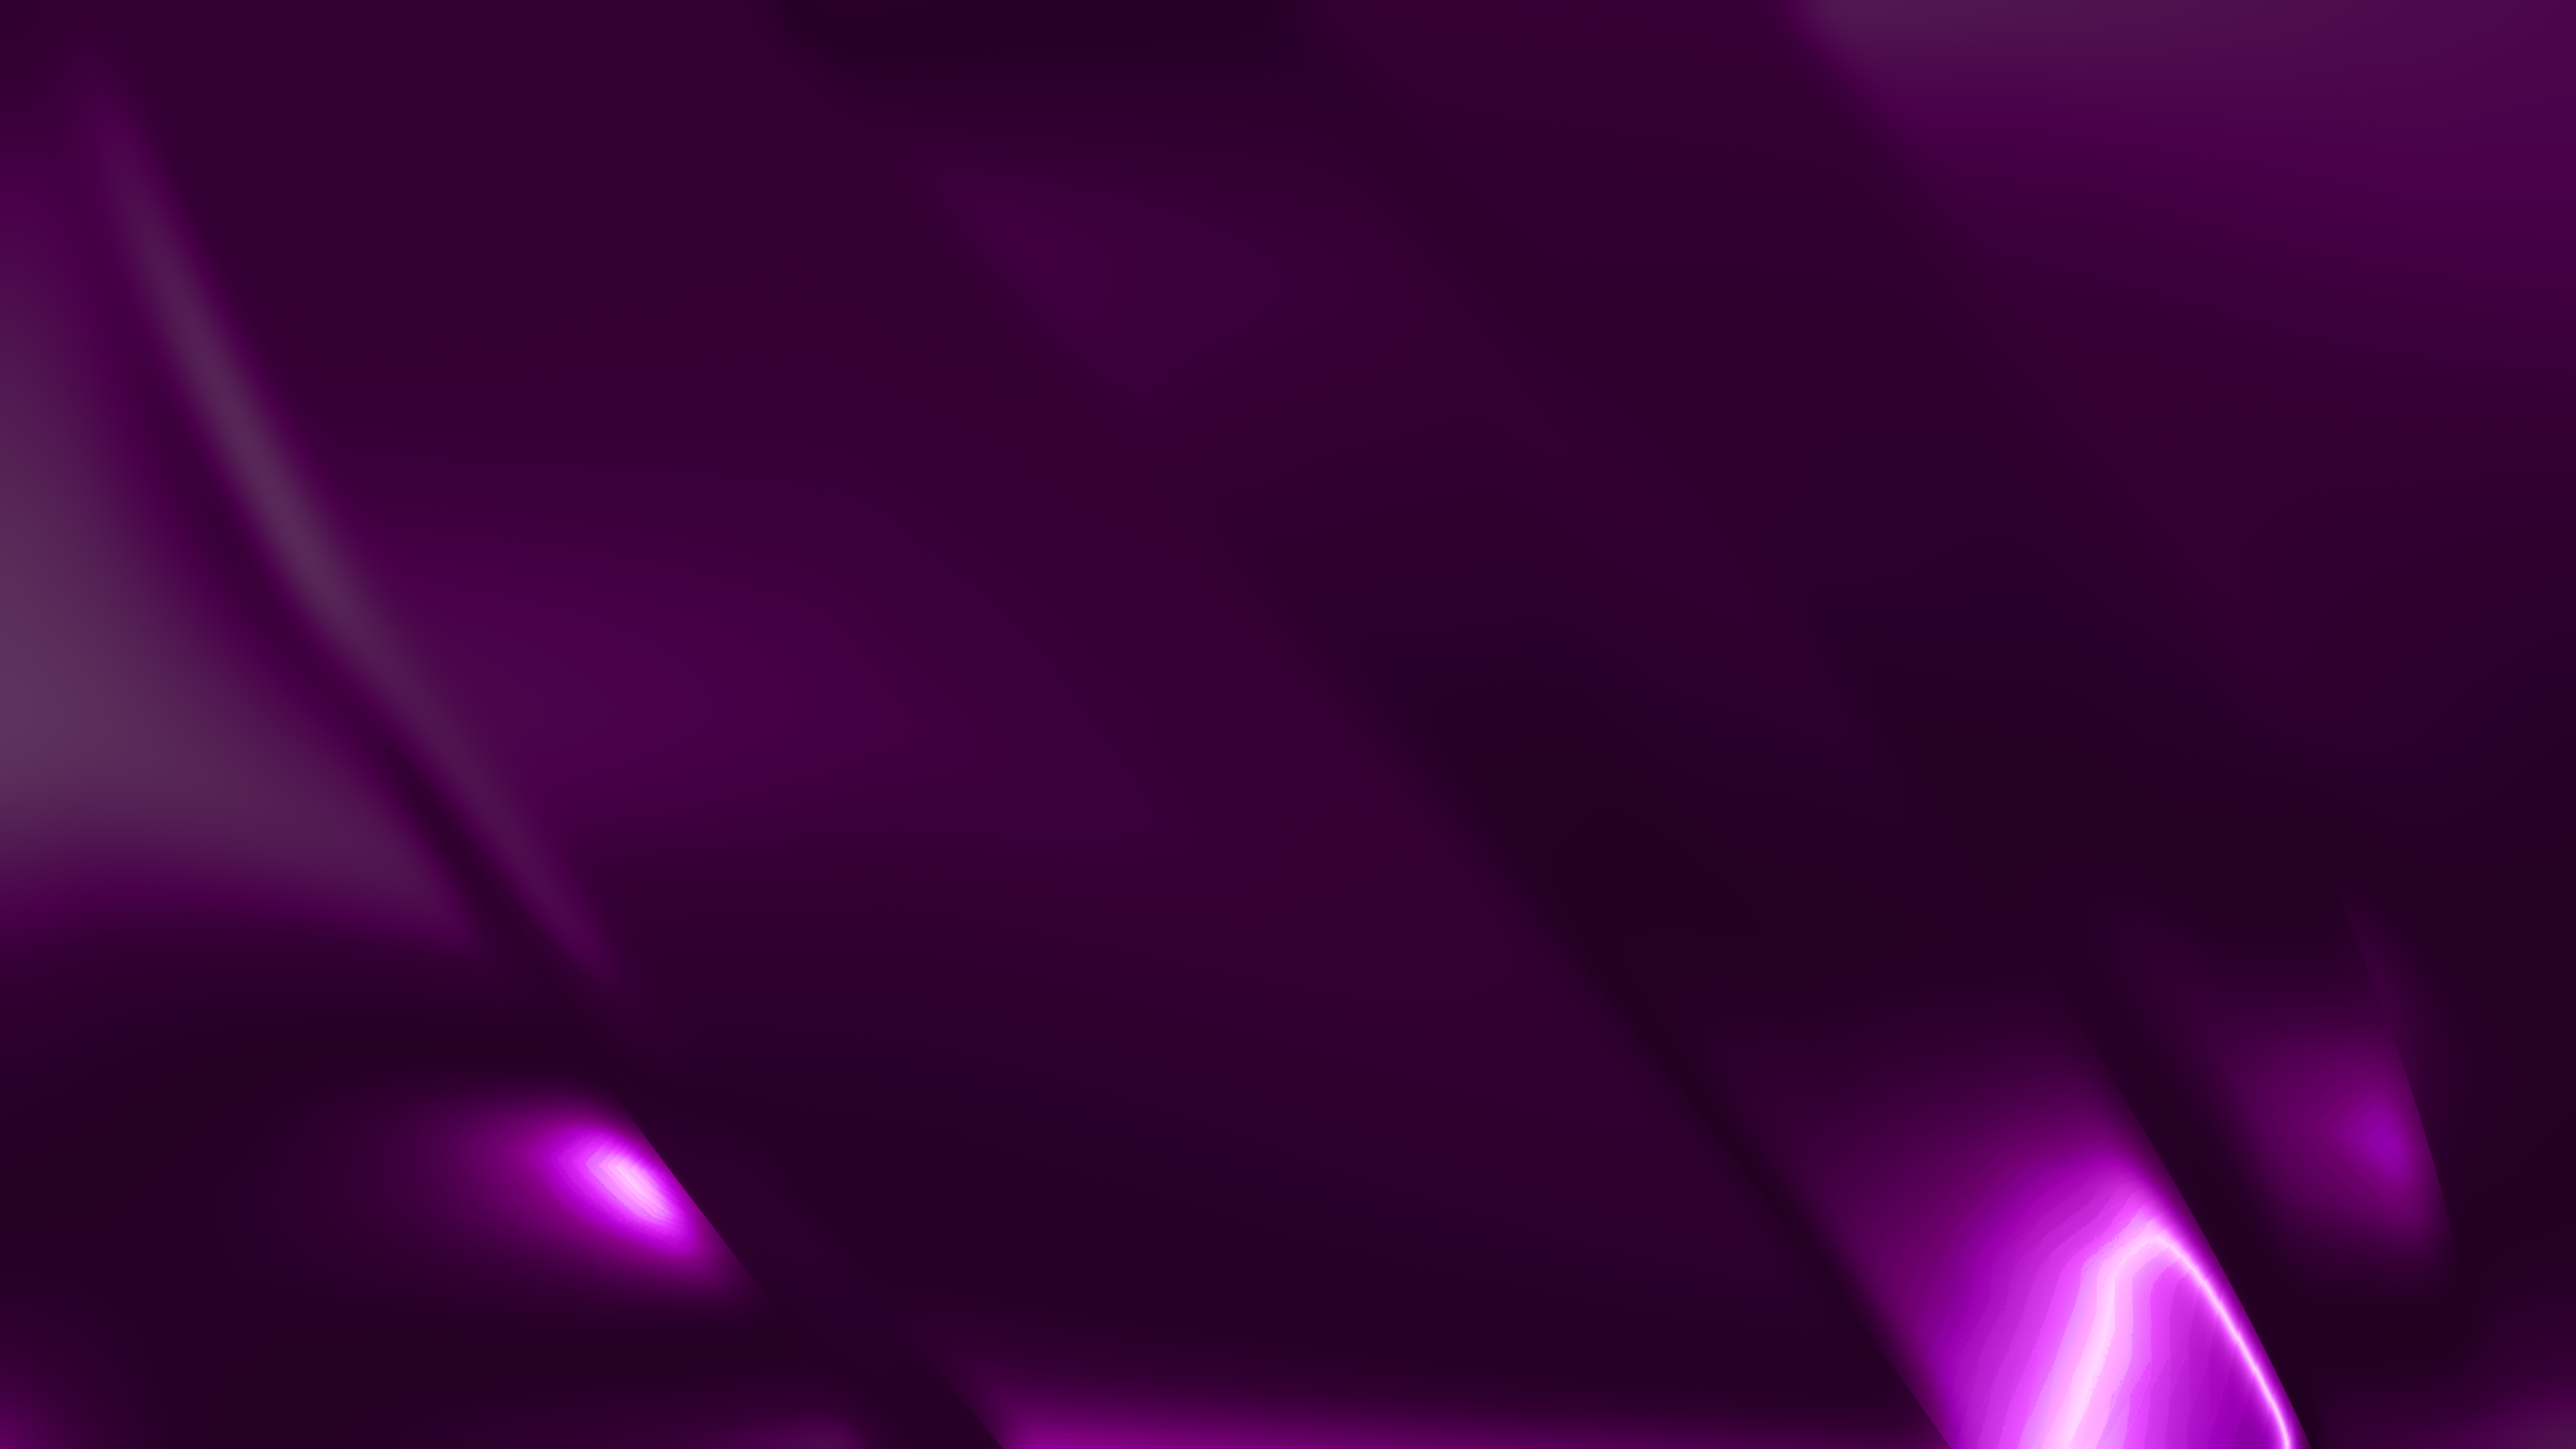 Free Purple and Black Background Image